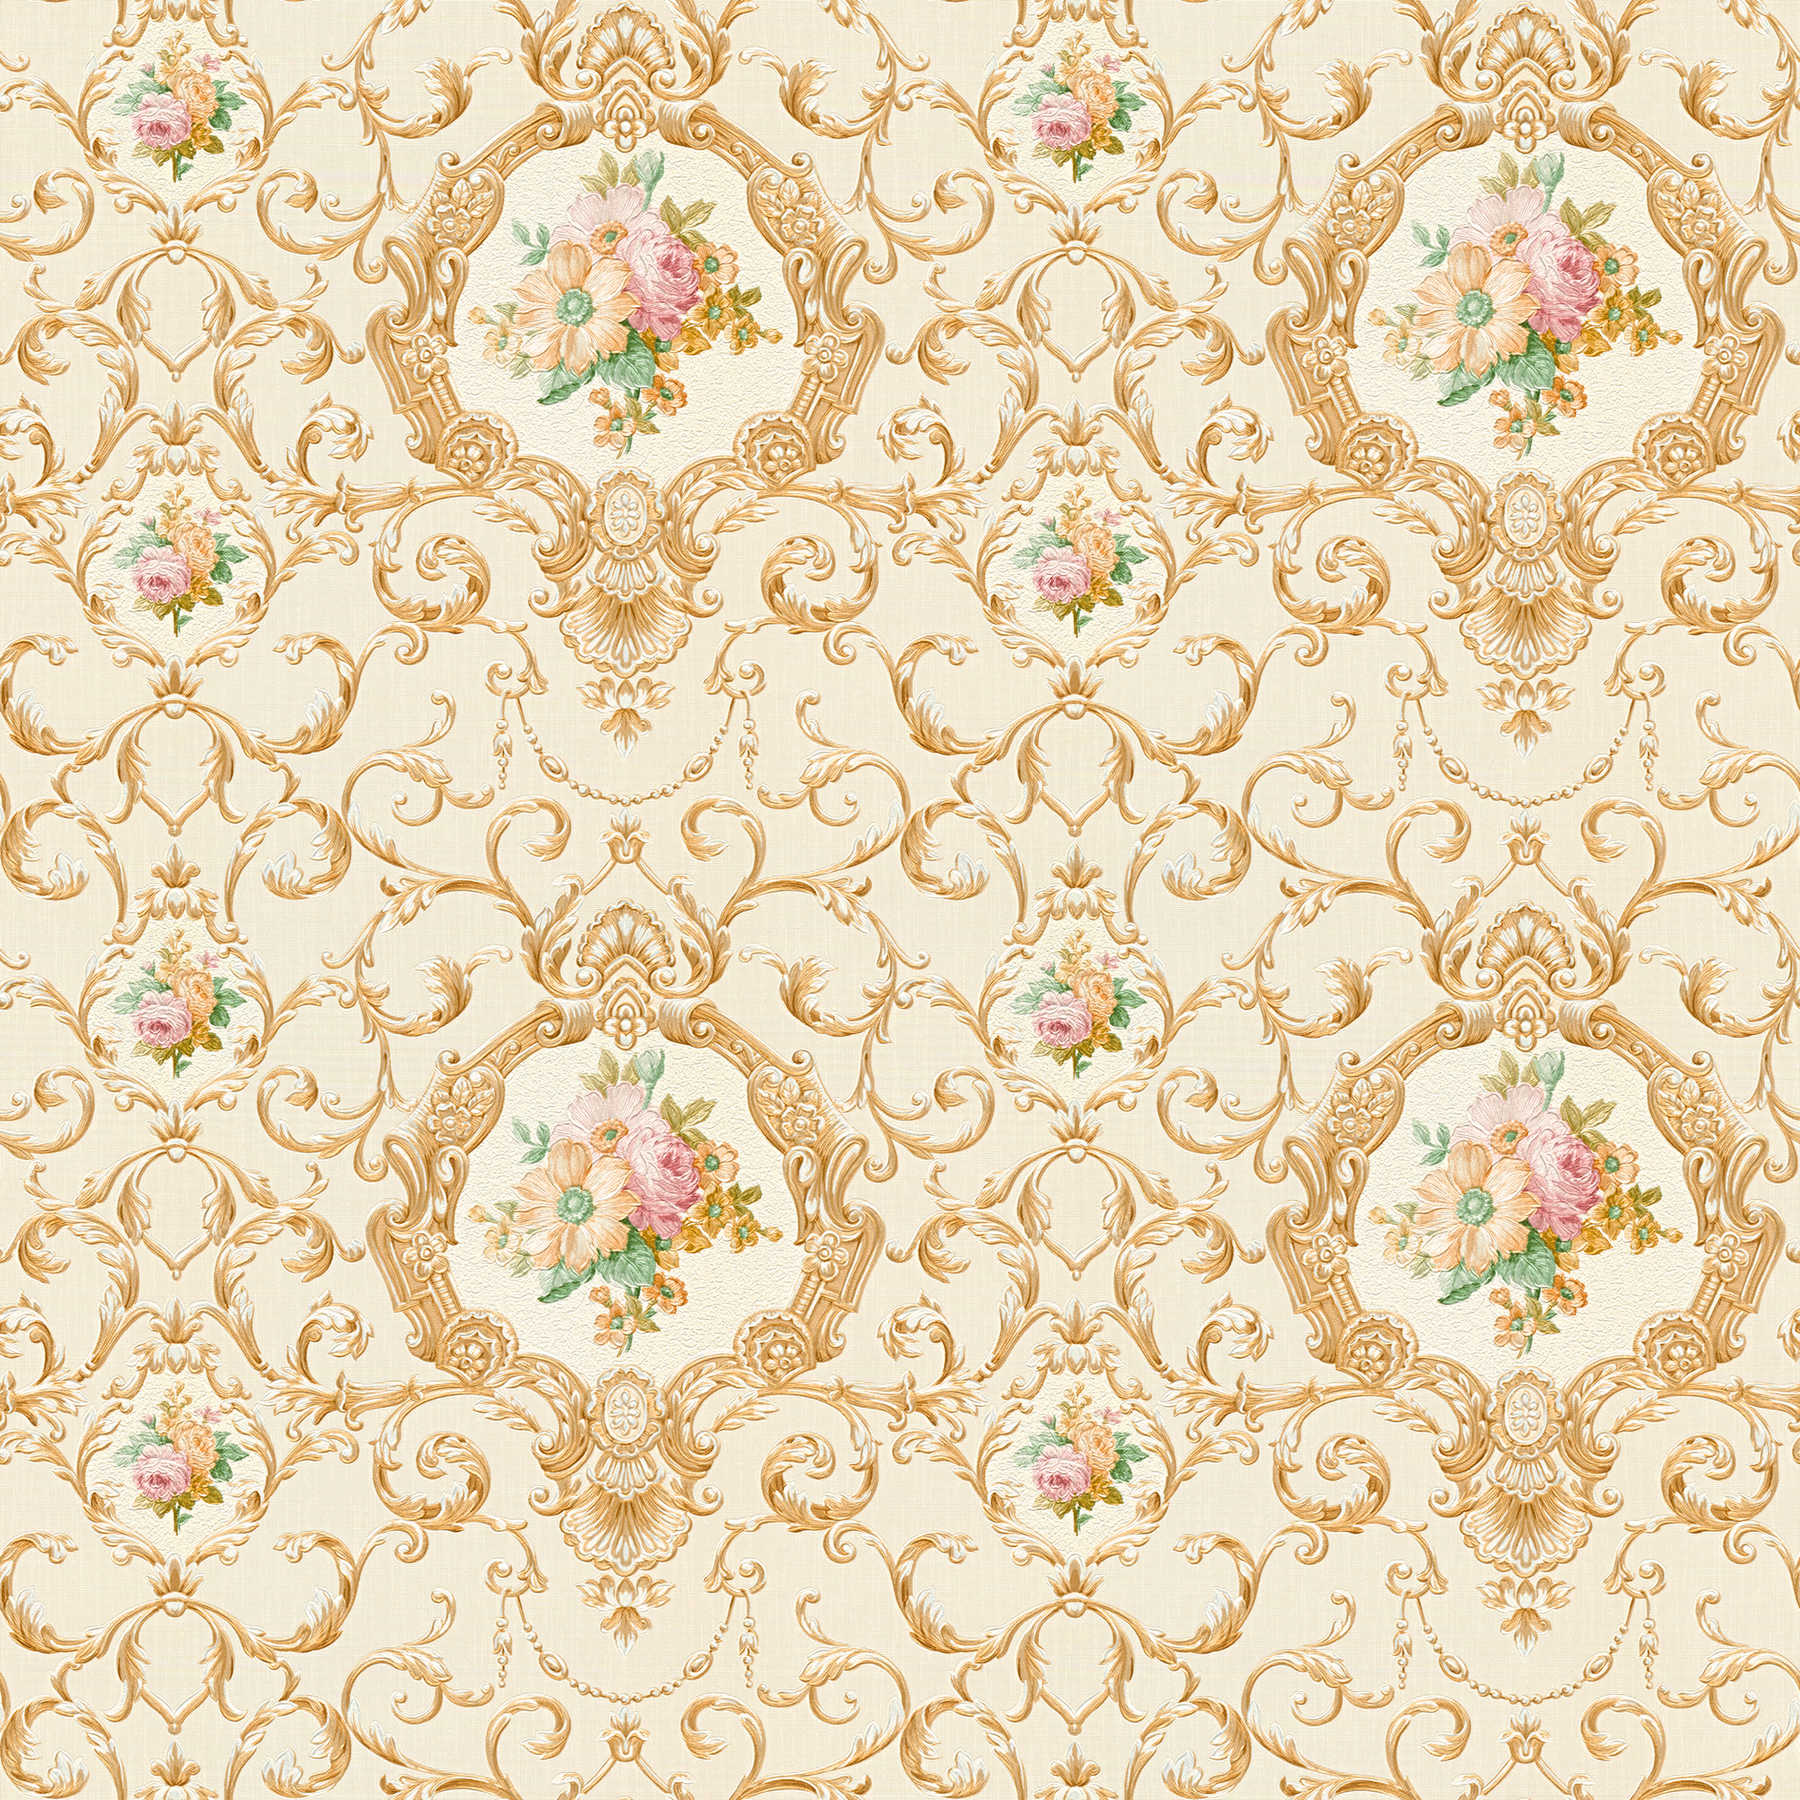 Opulent wallpaper with ornamental pattern & flowers - metallic
